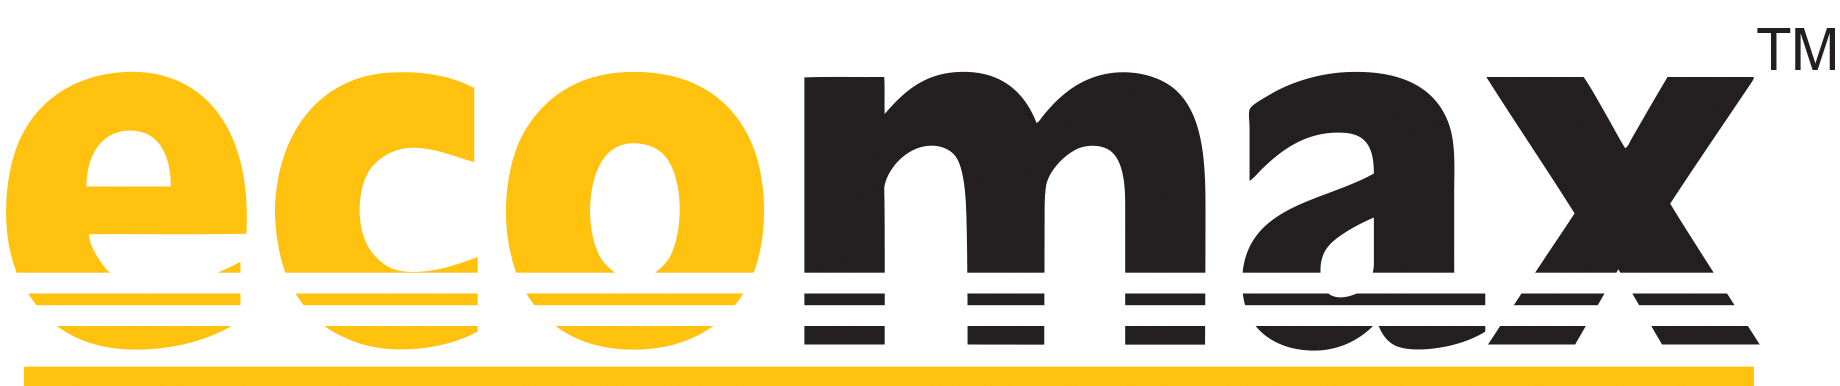 ecomax logo